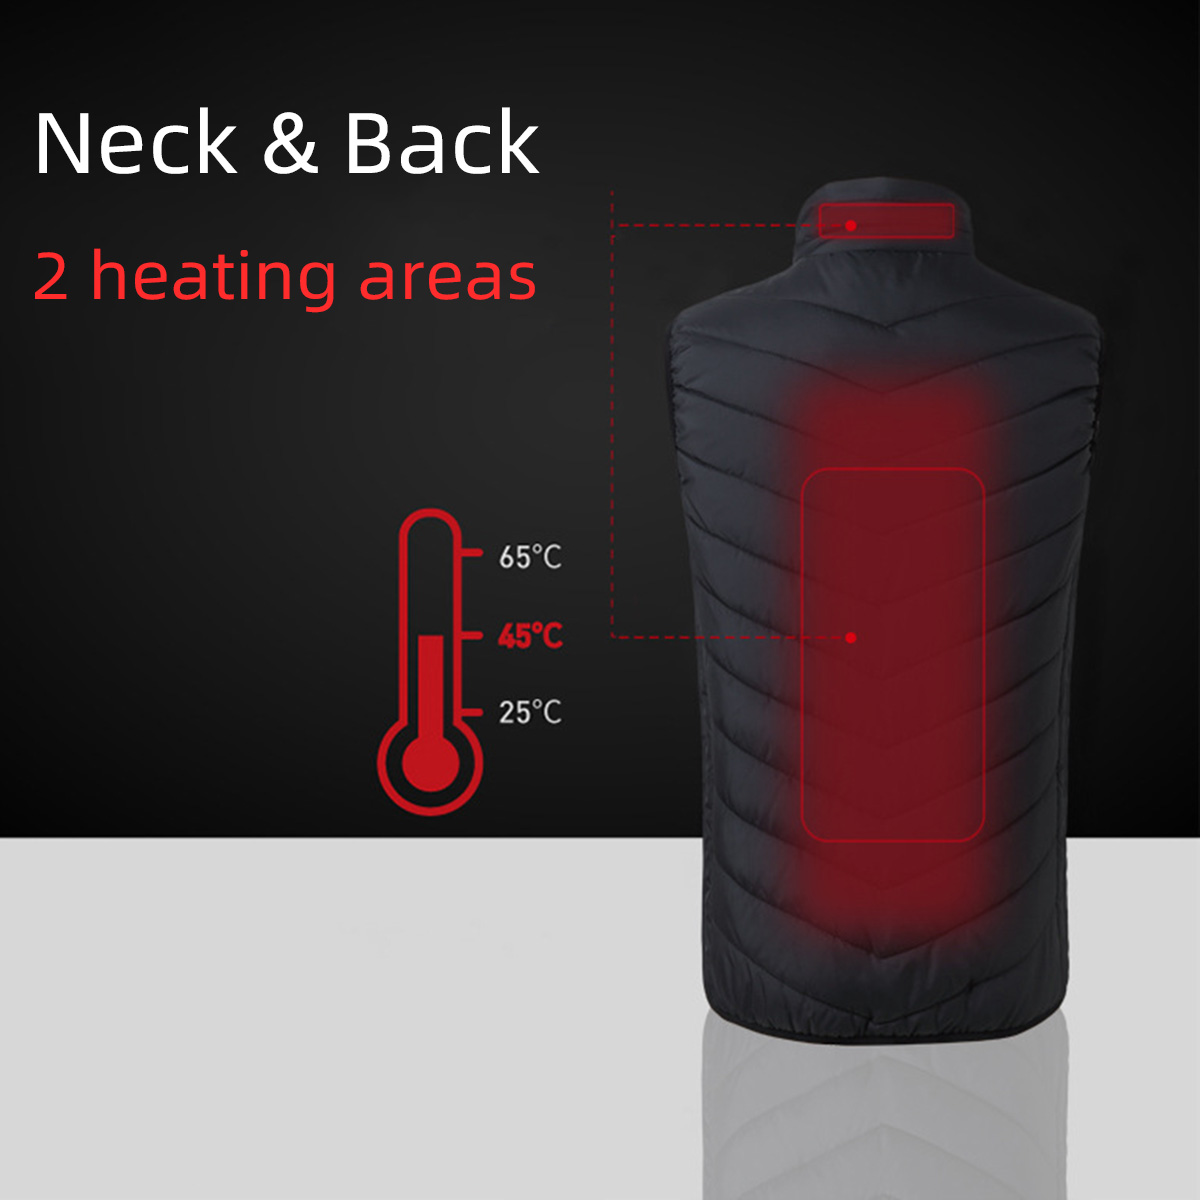 Bakeey Graphene Electric Heating Vest USB Safe Intelligent Constant Temperature Heating Suit Men's Heating Cotton Electric Vest